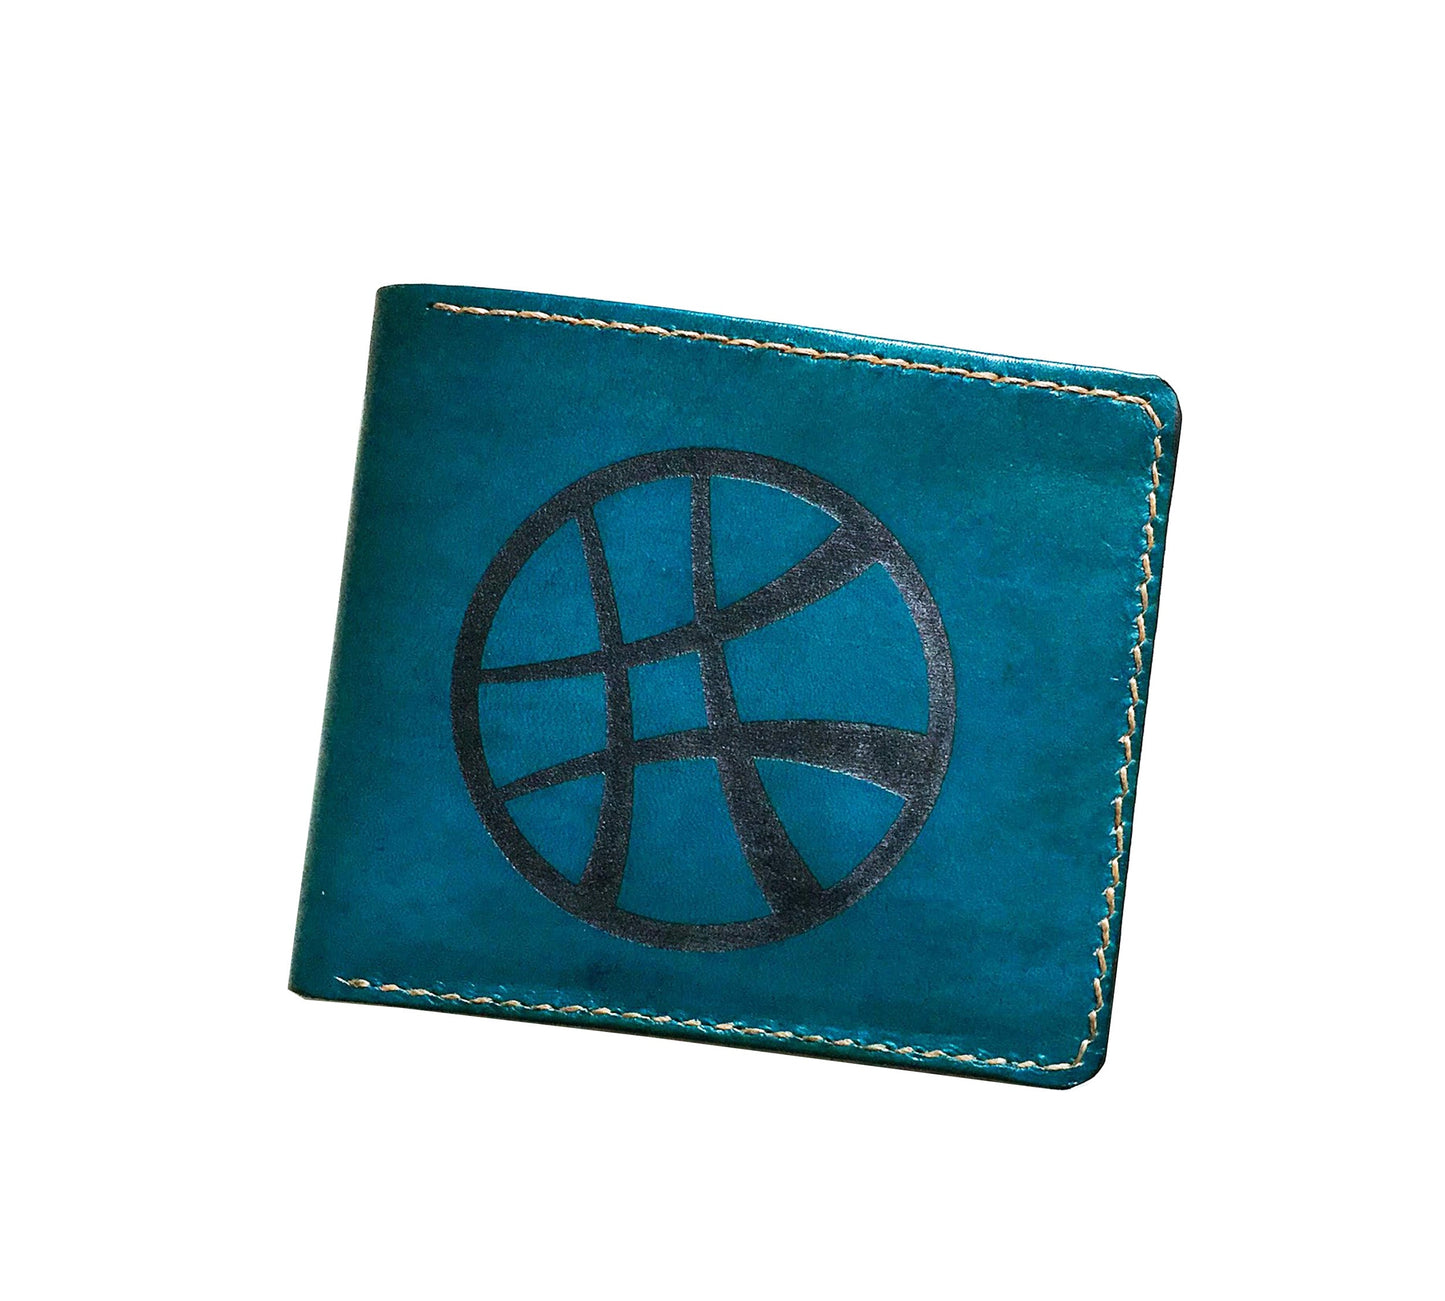 Mayan Corner - Superheroes leather handmade wallet, customized men's wallet, Leather gift ideas for men - Sanctum sanctorum logo